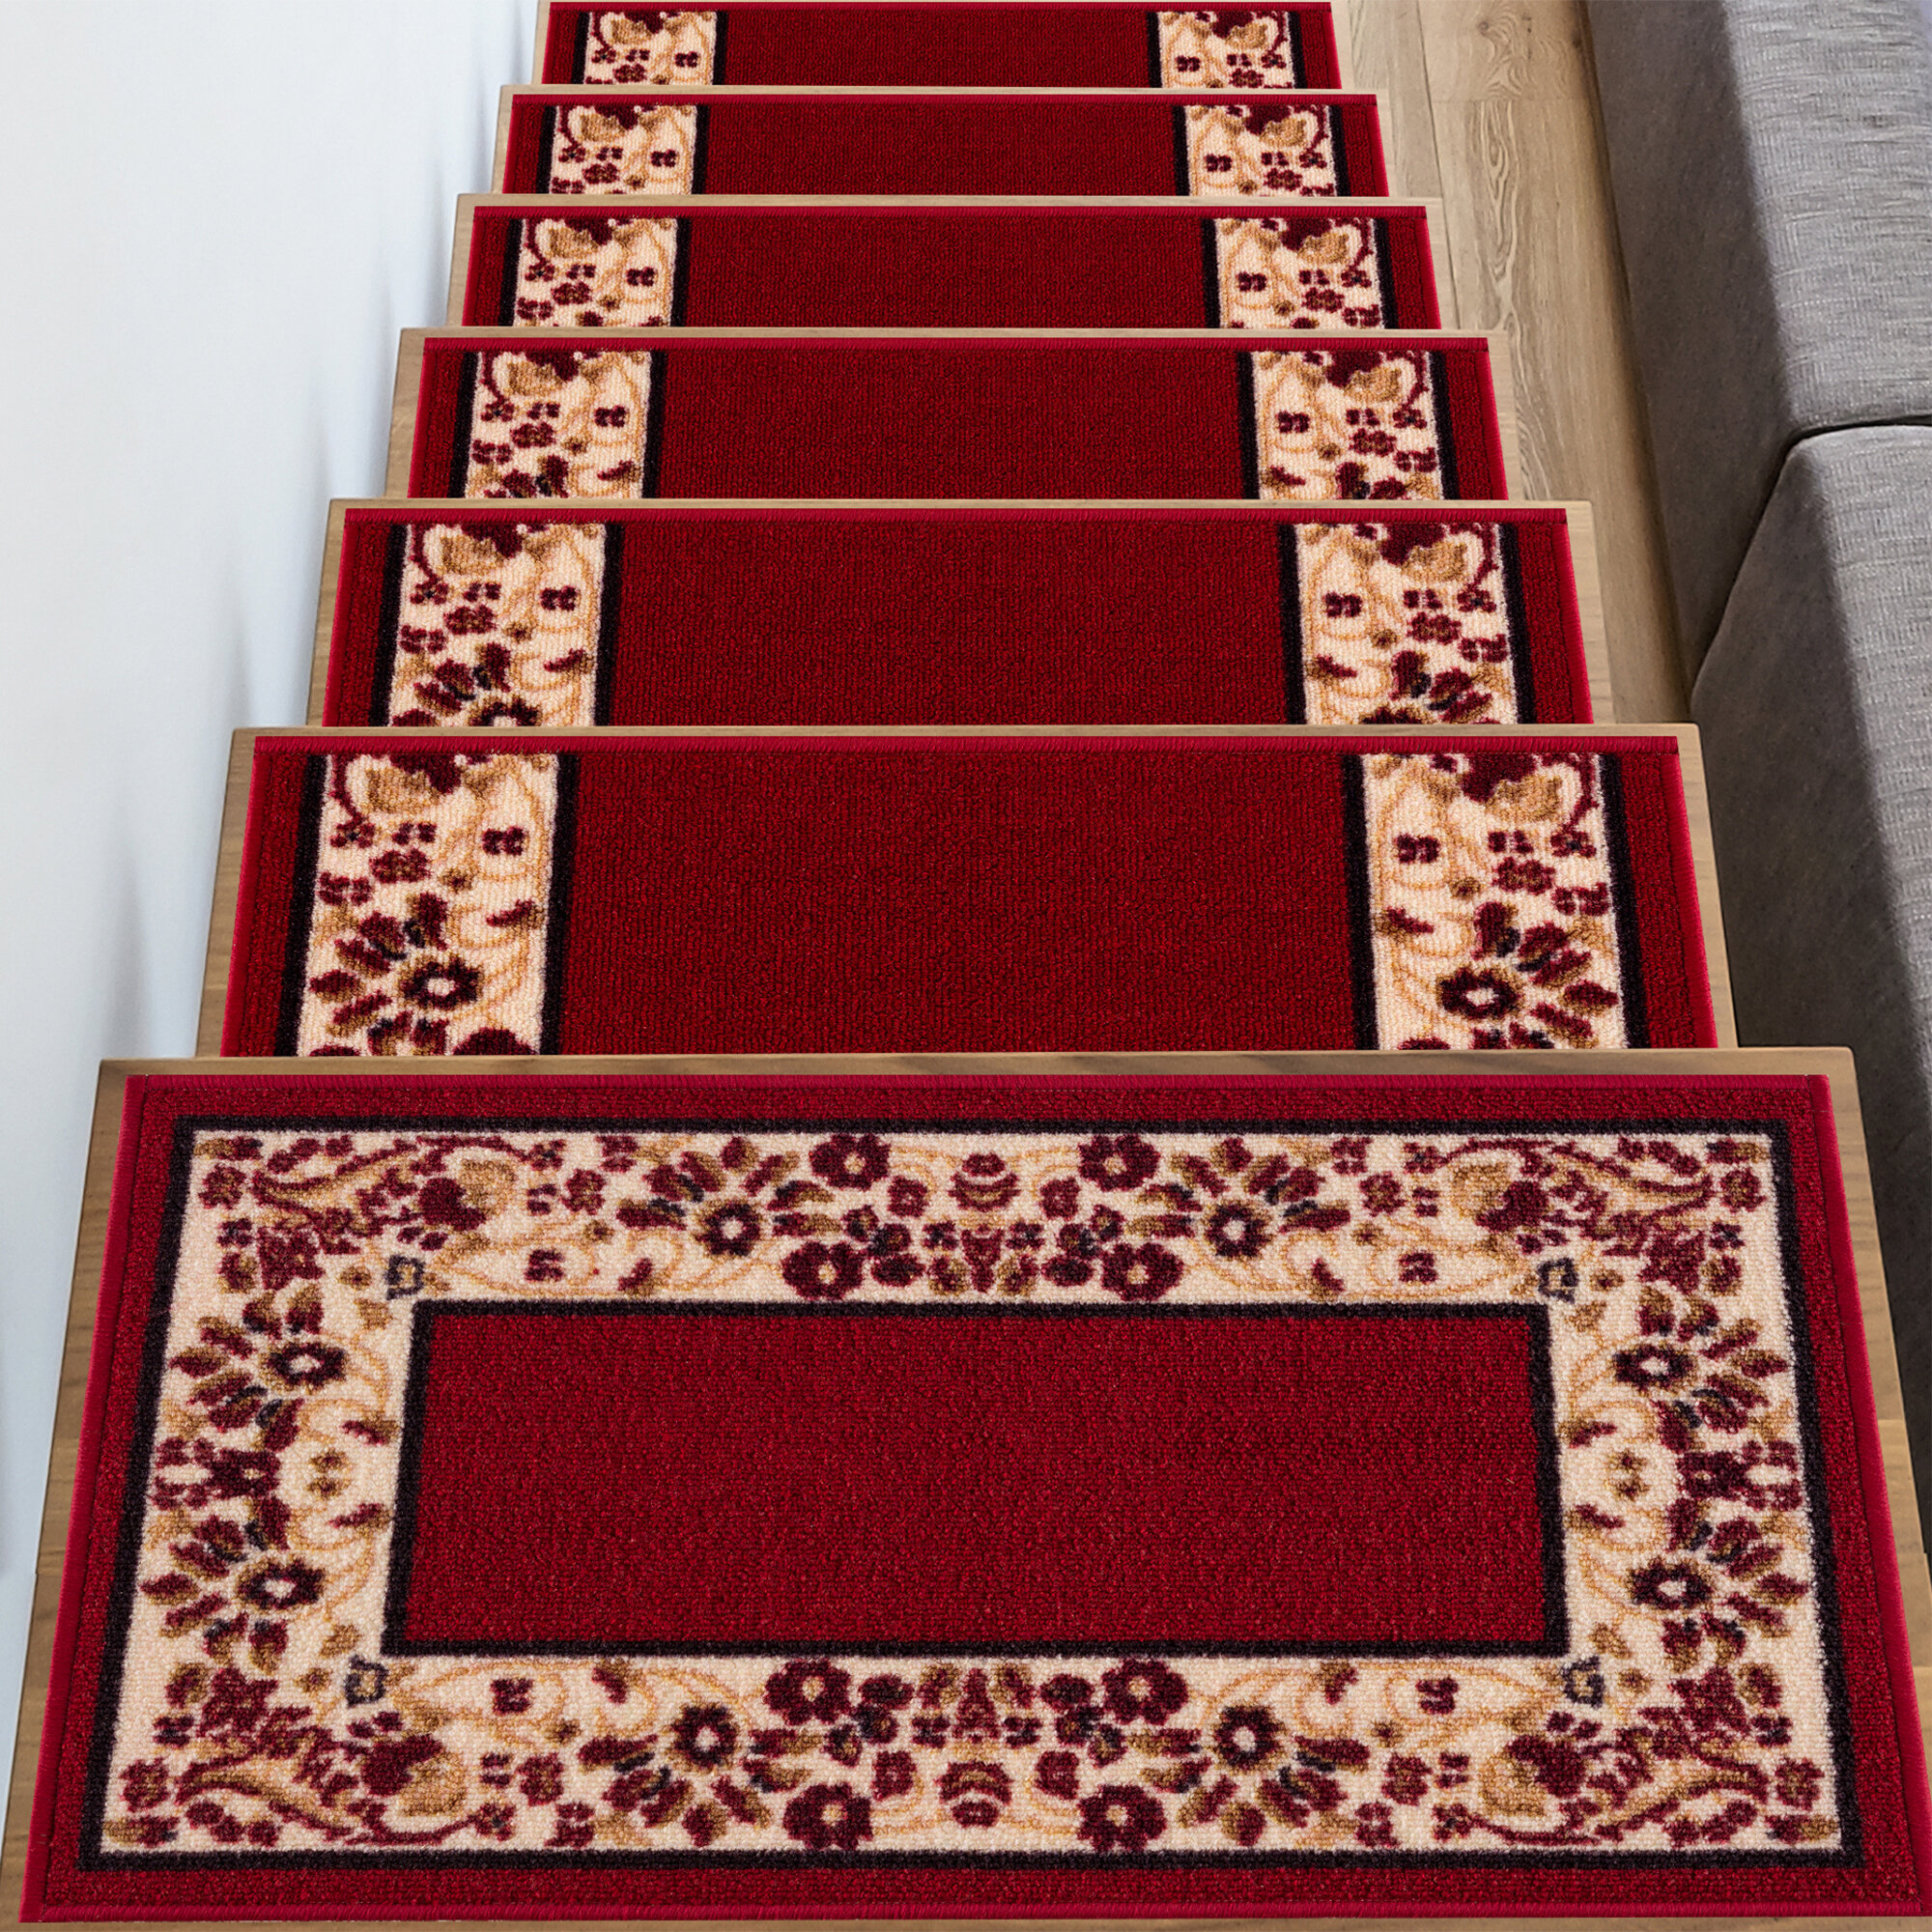 Red Barrel Studio Binni Carpet Mat Flower Bordered Design Slip Resistant Stair Tread Wayfair